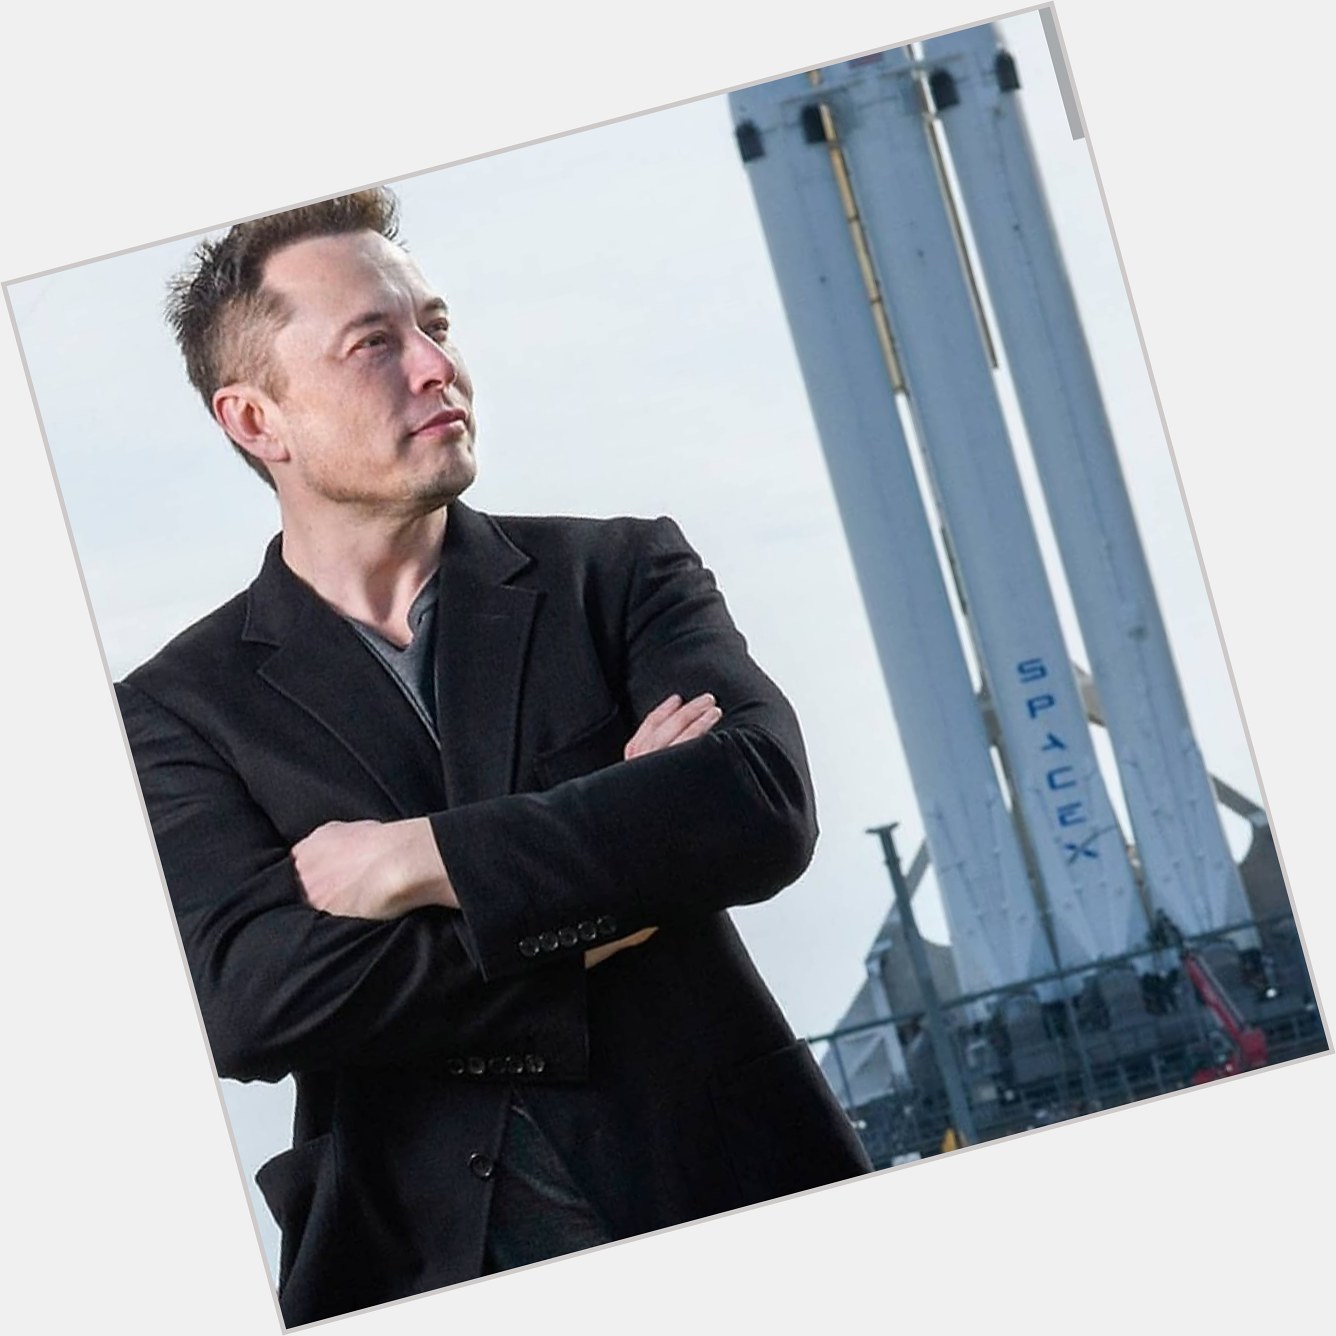 Happy birthday Elon musk 